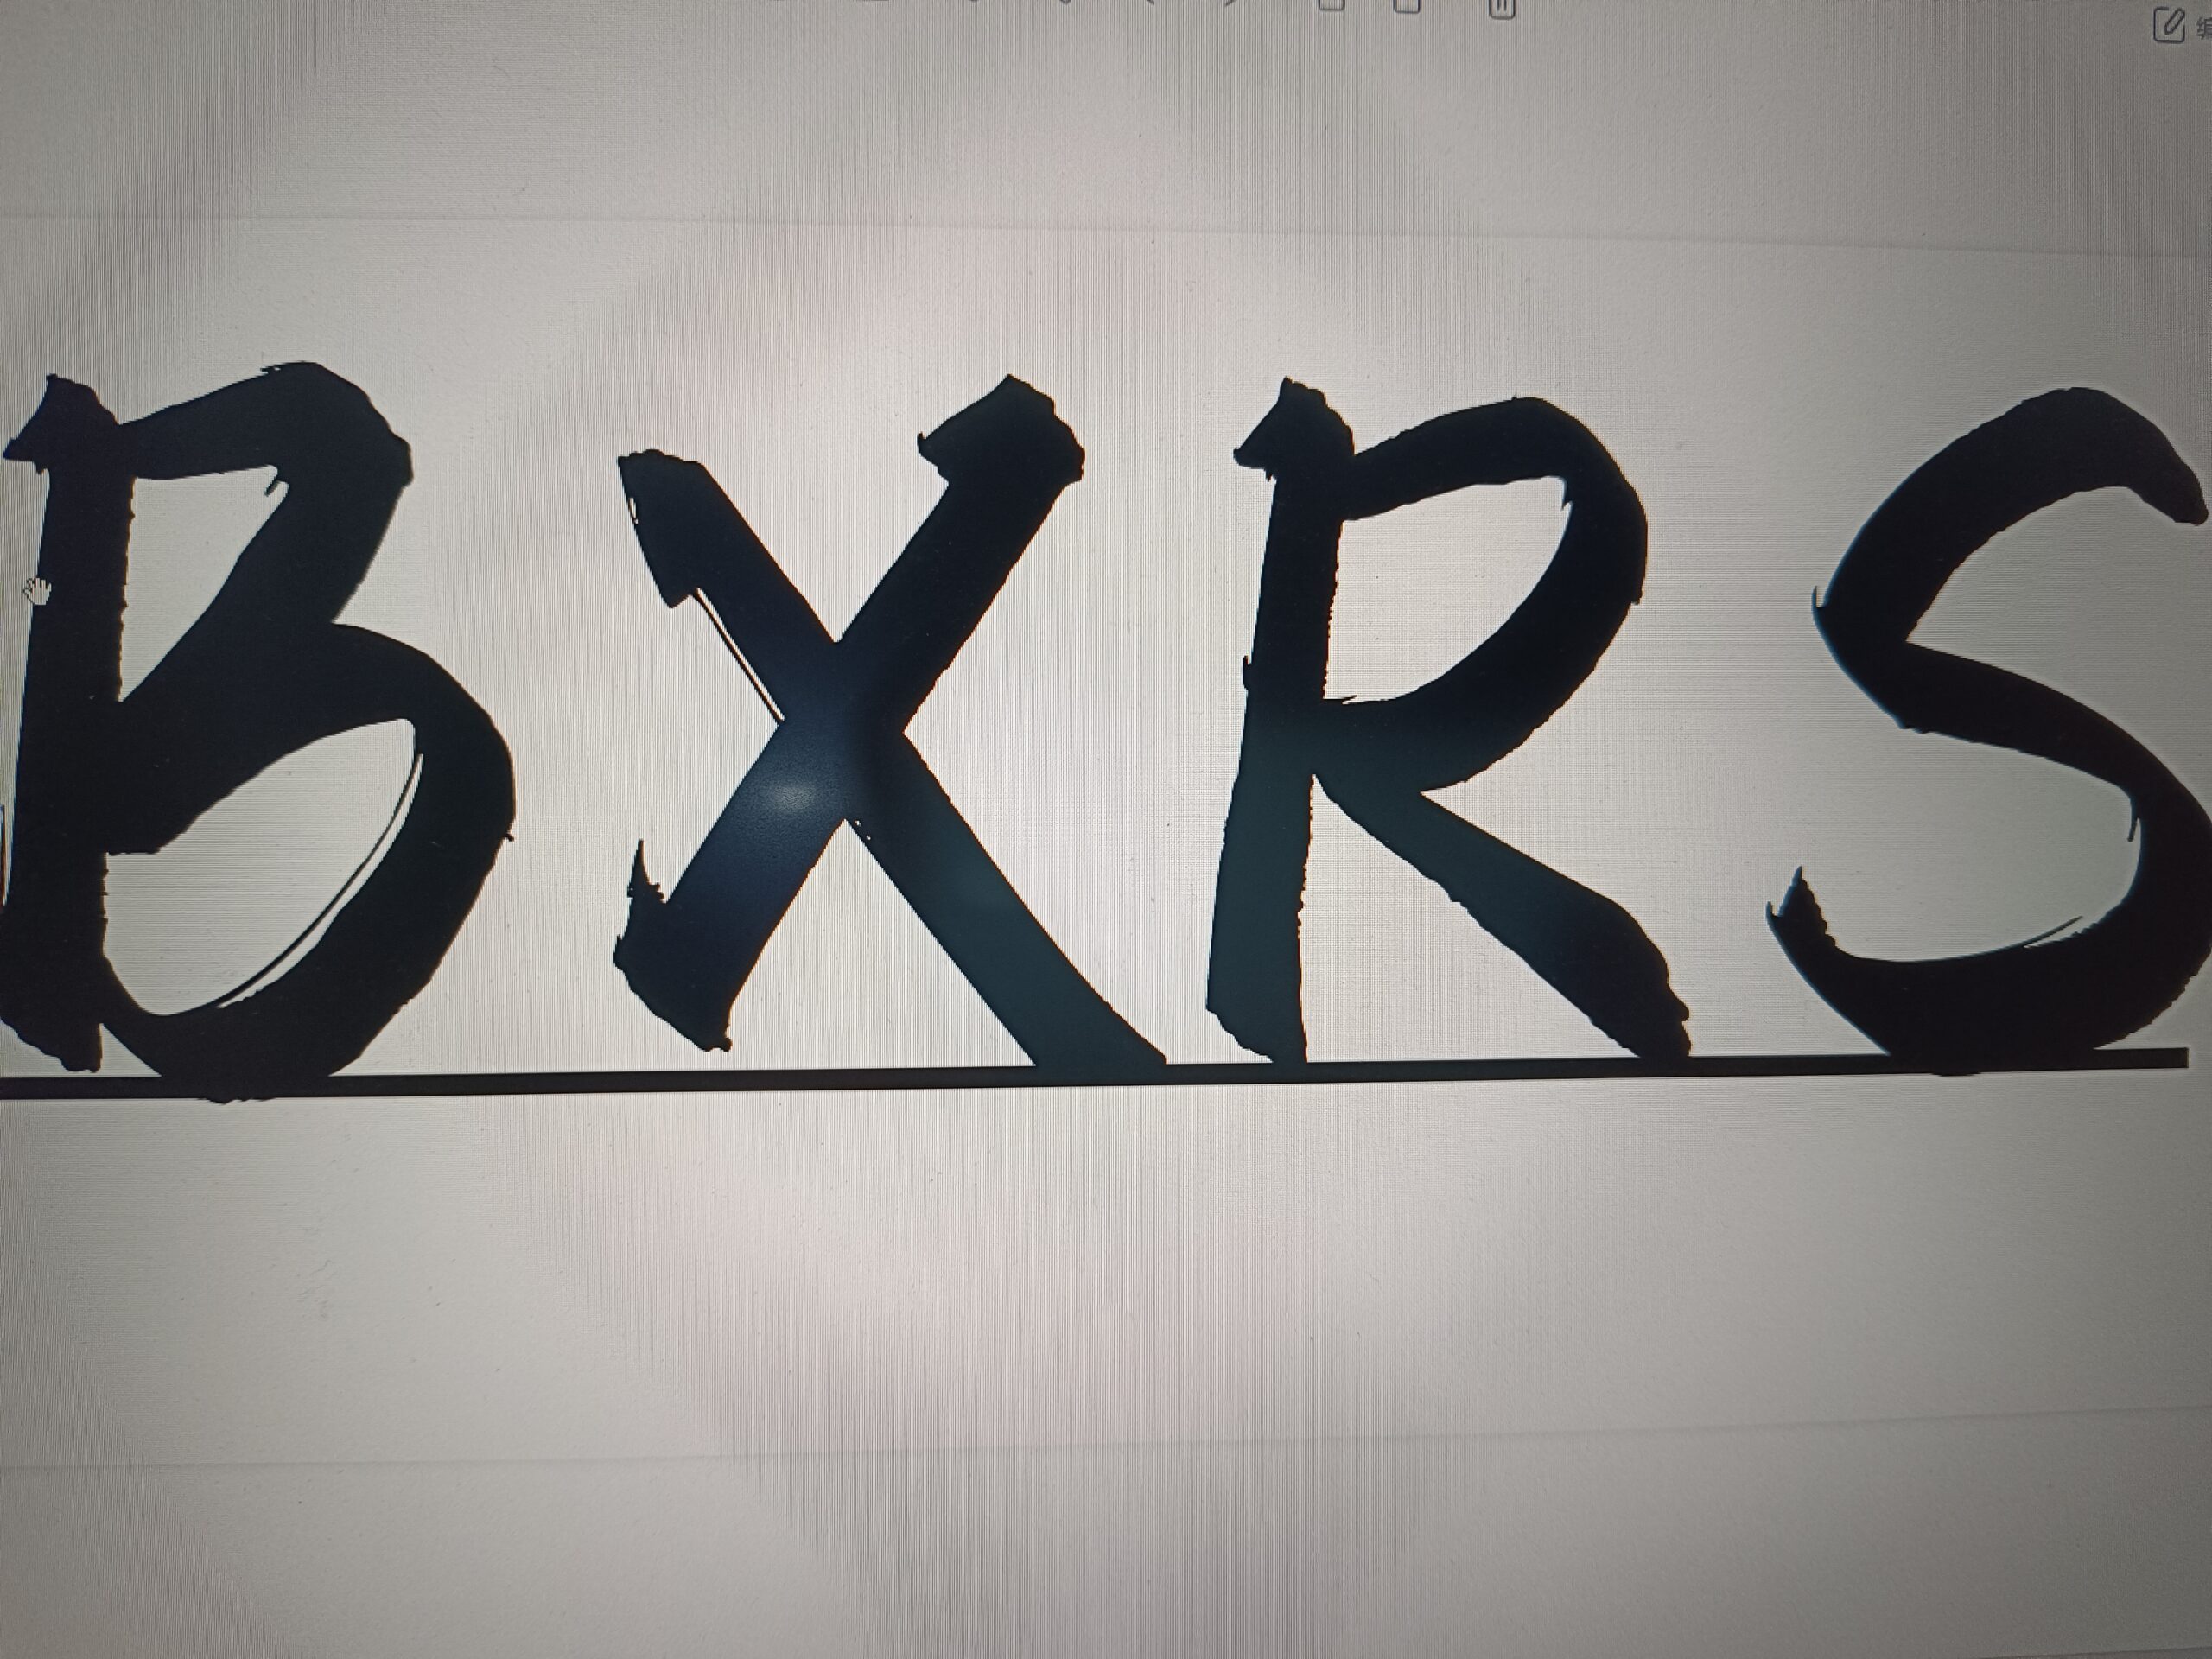 BXRS